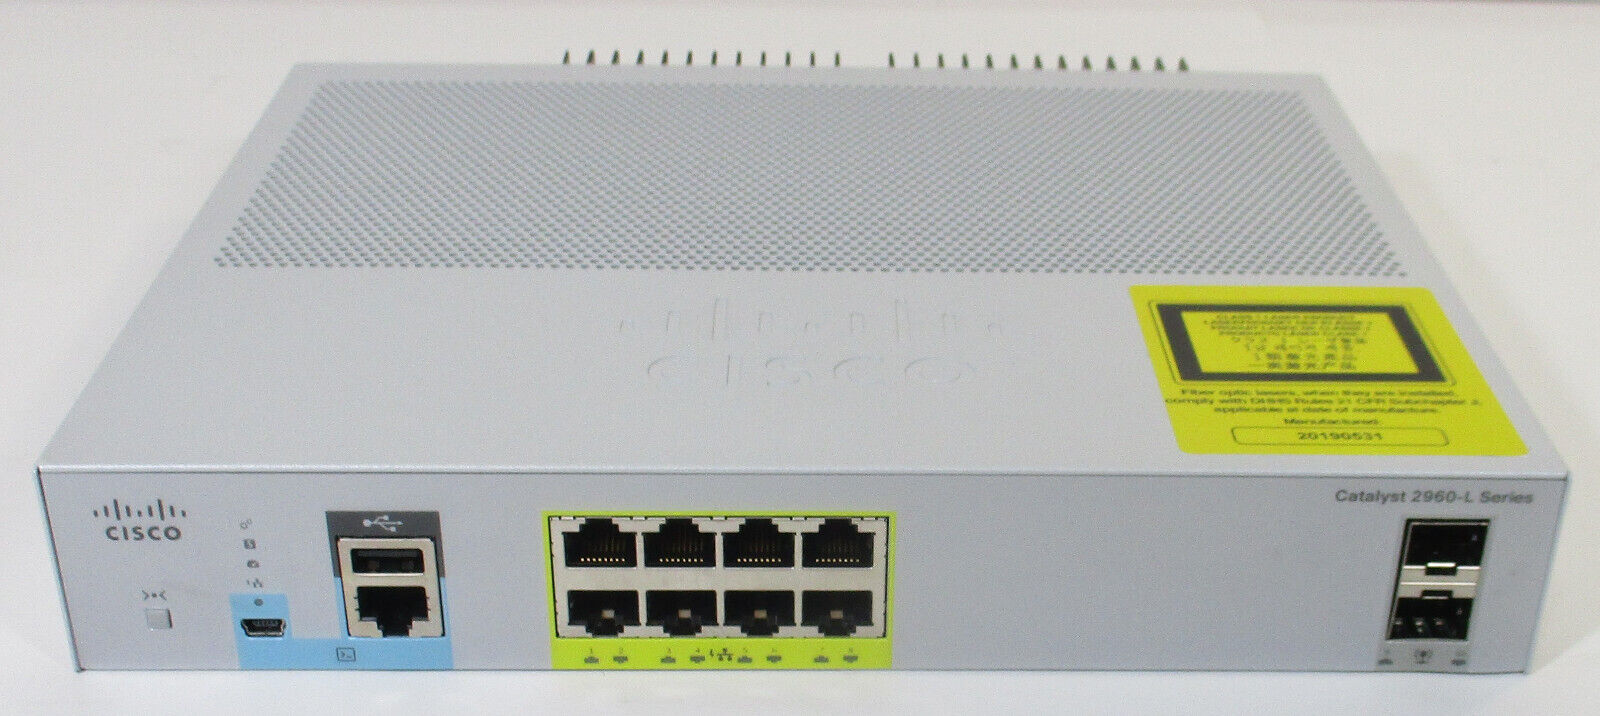 Cisco Catalyst 2960-L Series WS-C2960L-8PS-LL 8 Port PoE Switch